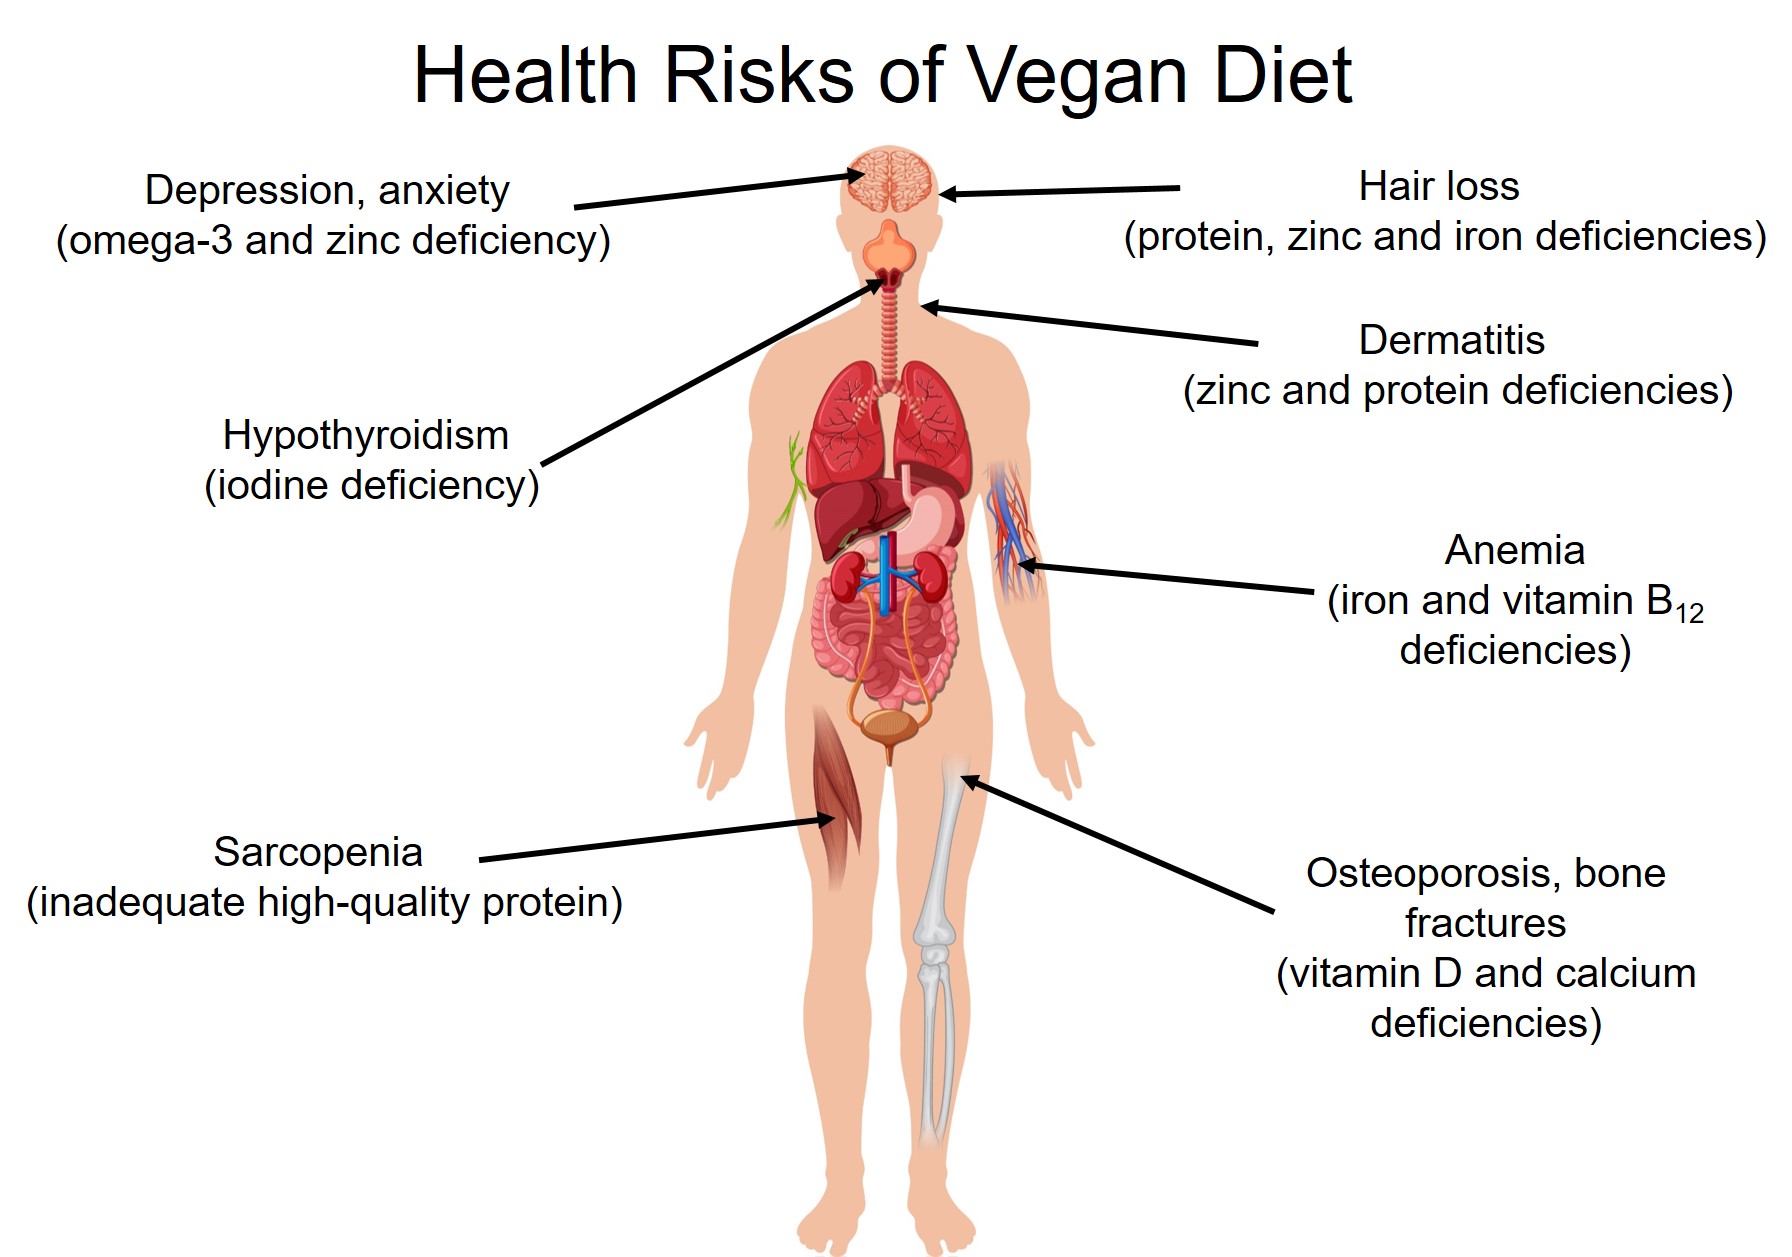 Research Shows Vegan Diet Leads to Nutritional Deficiencies, Health Problems; Plant-Forward Whole Foods Diet Healthier | Saint Luke's System